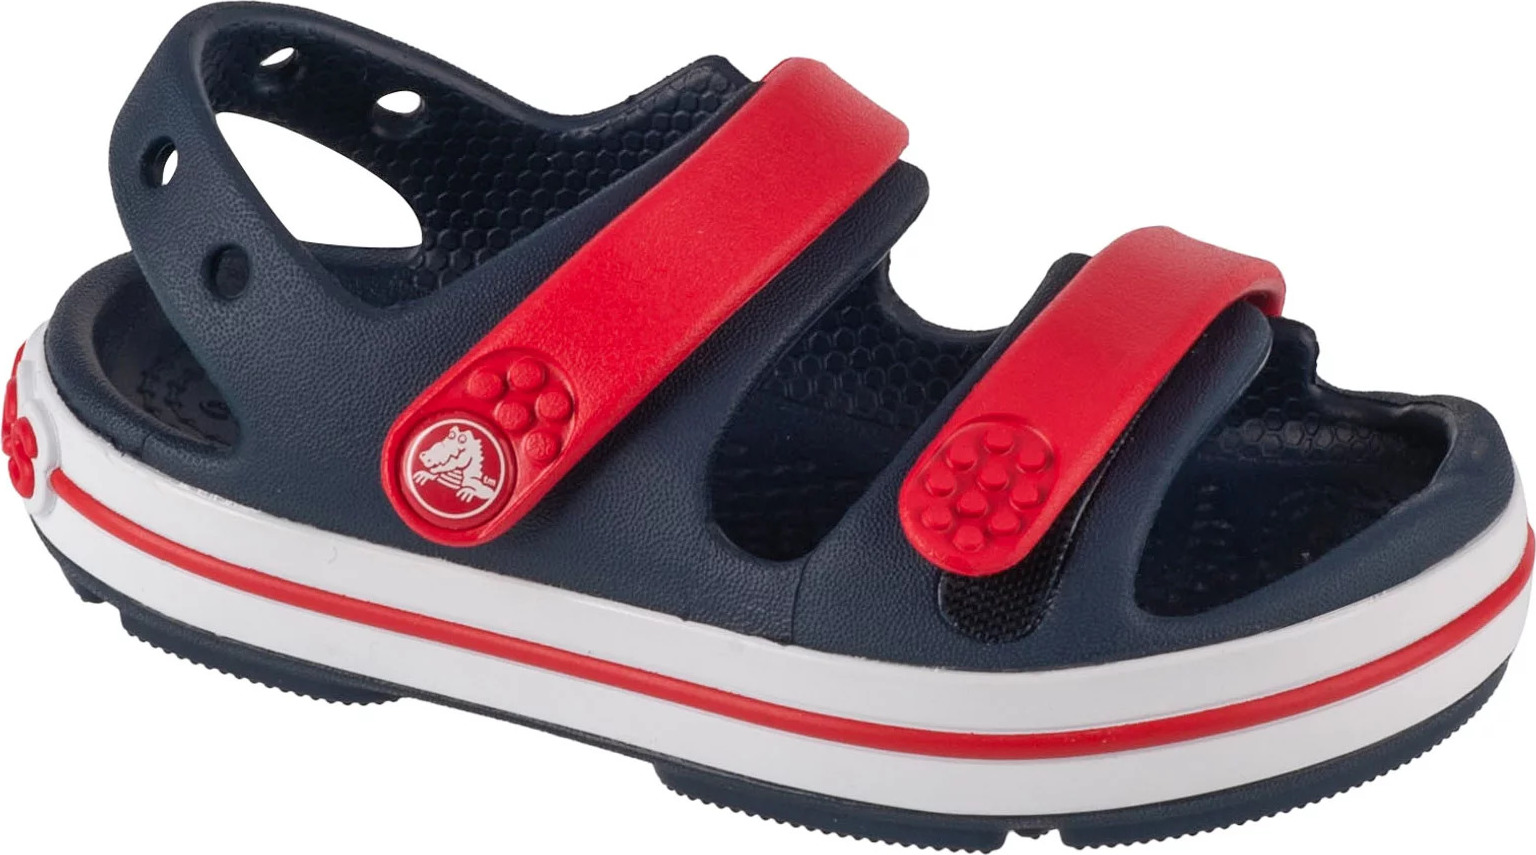 Tmavě modré chlapecké sandály Crocs Crocband Cruiser Sandal T 209424-4OT Velikost: 20/21